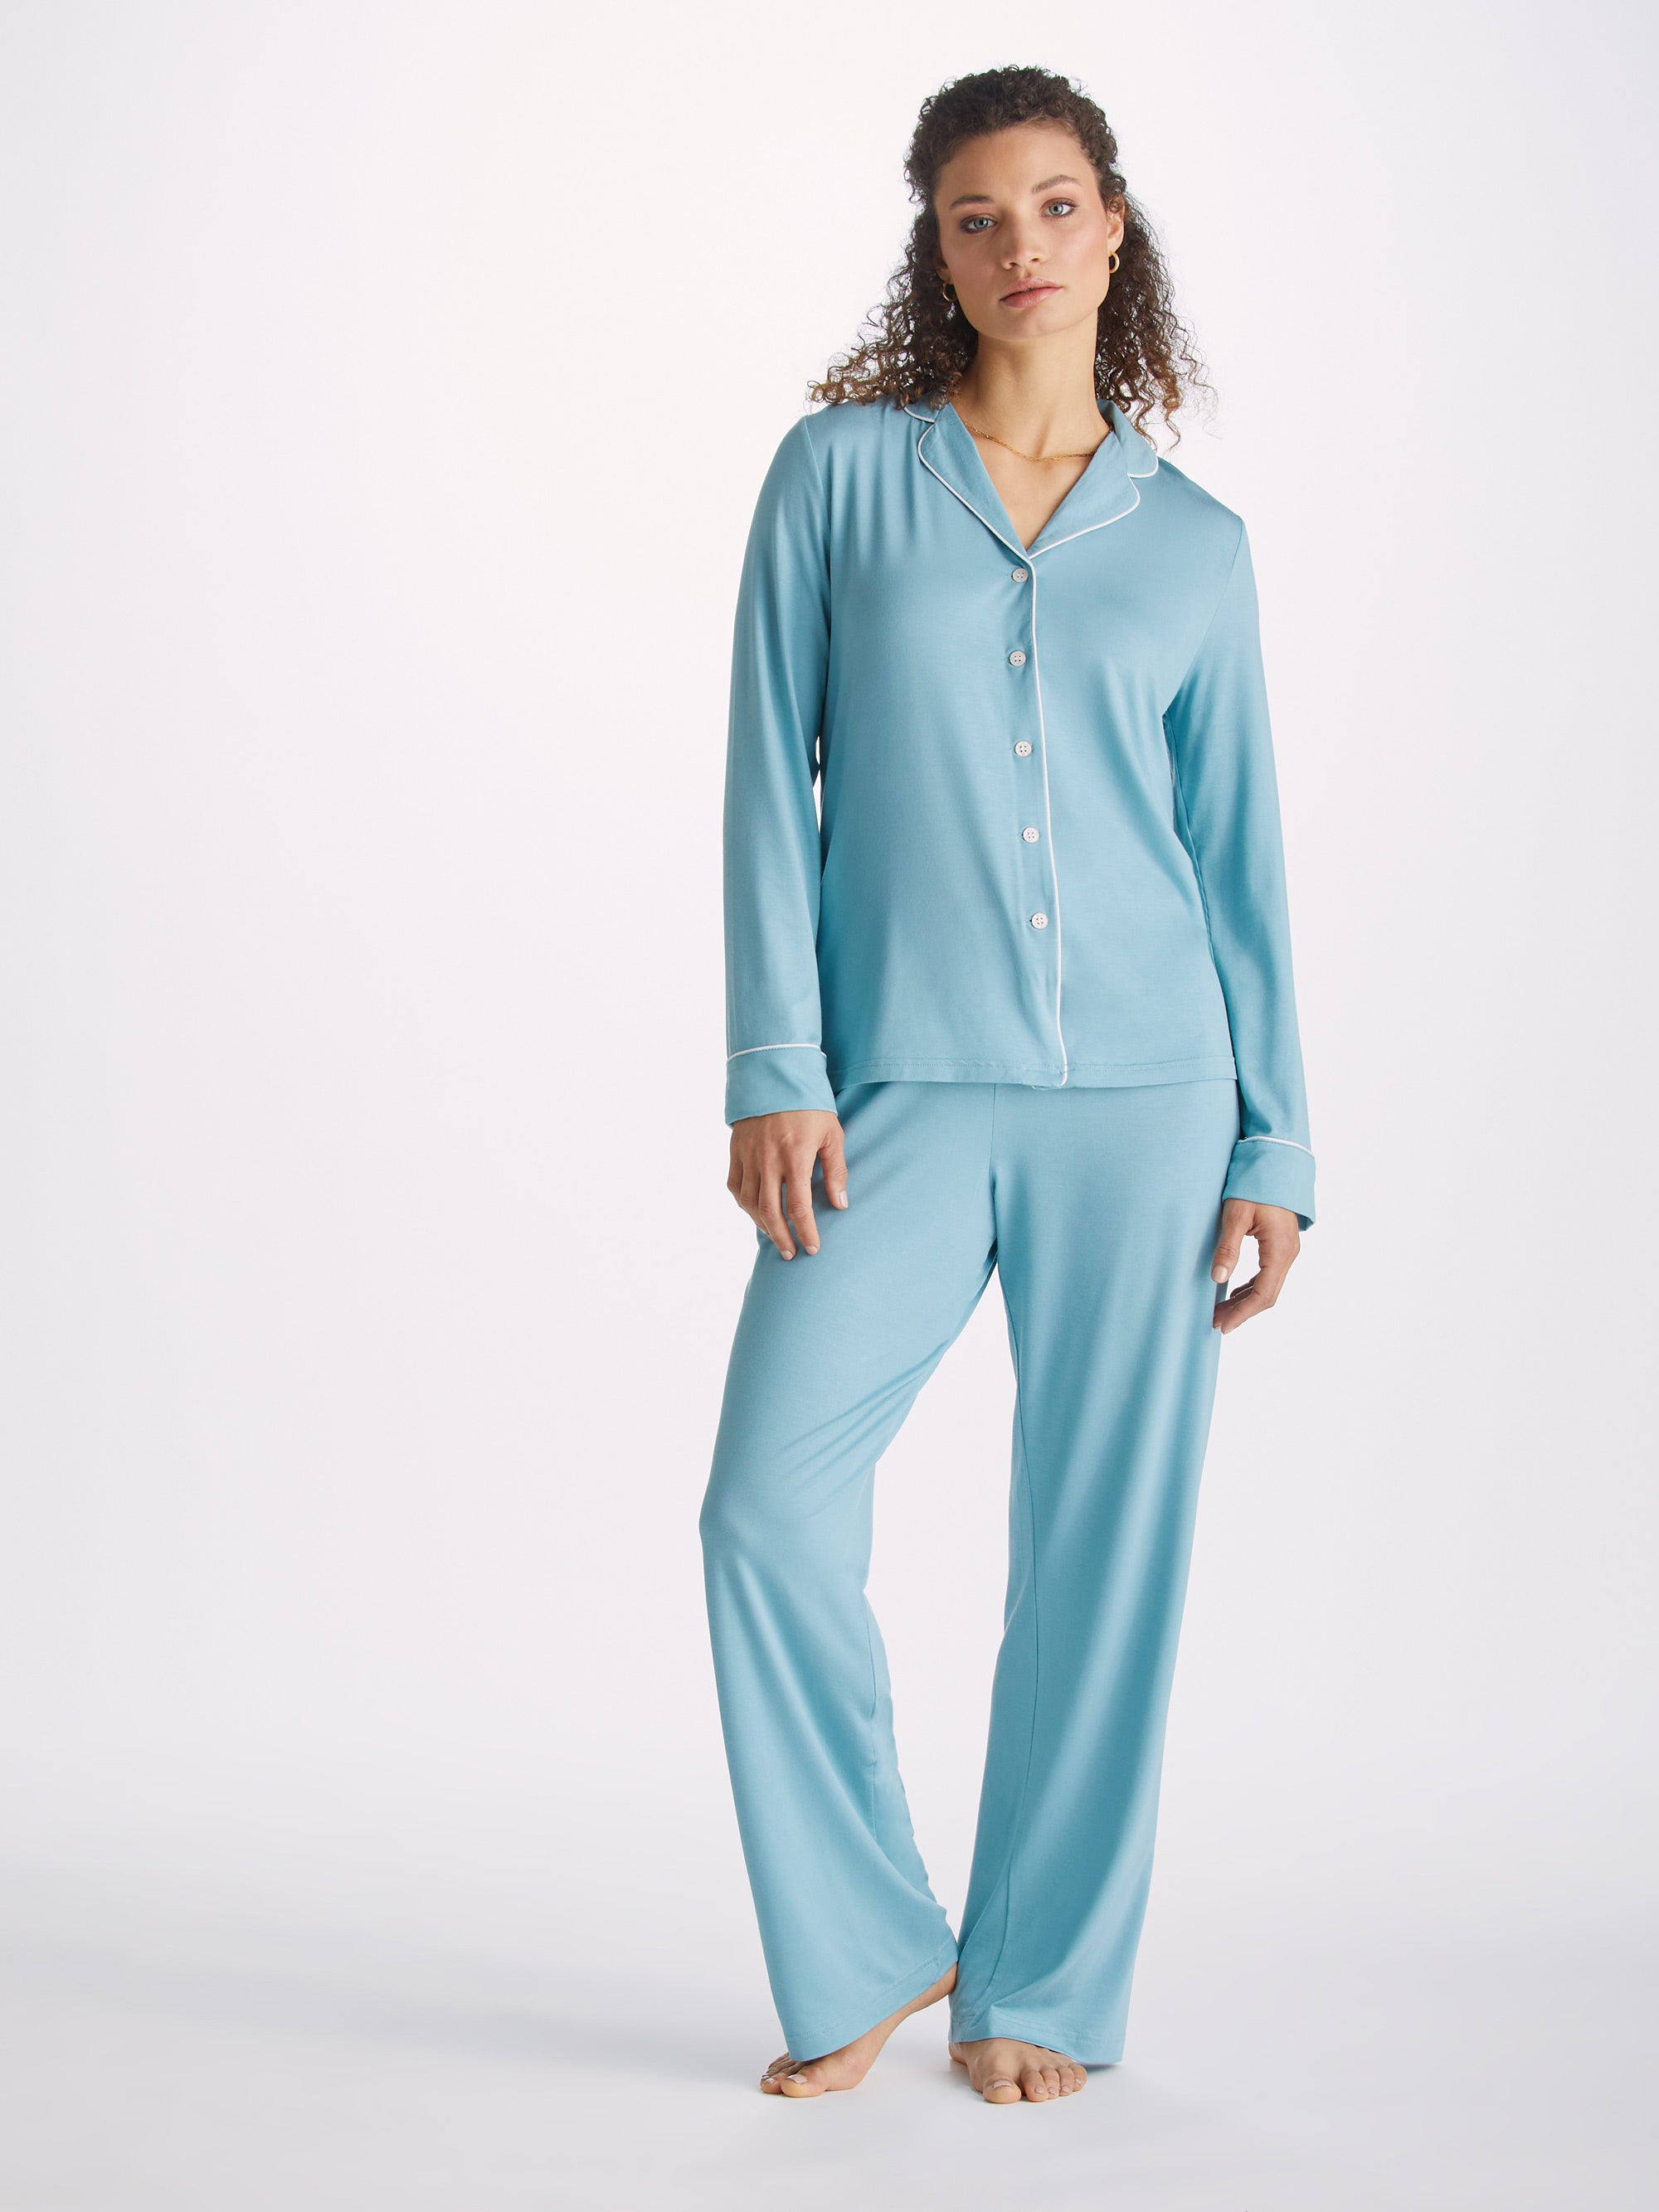 Modal Pyjamas, Women's Pyjamas, Sleepwear